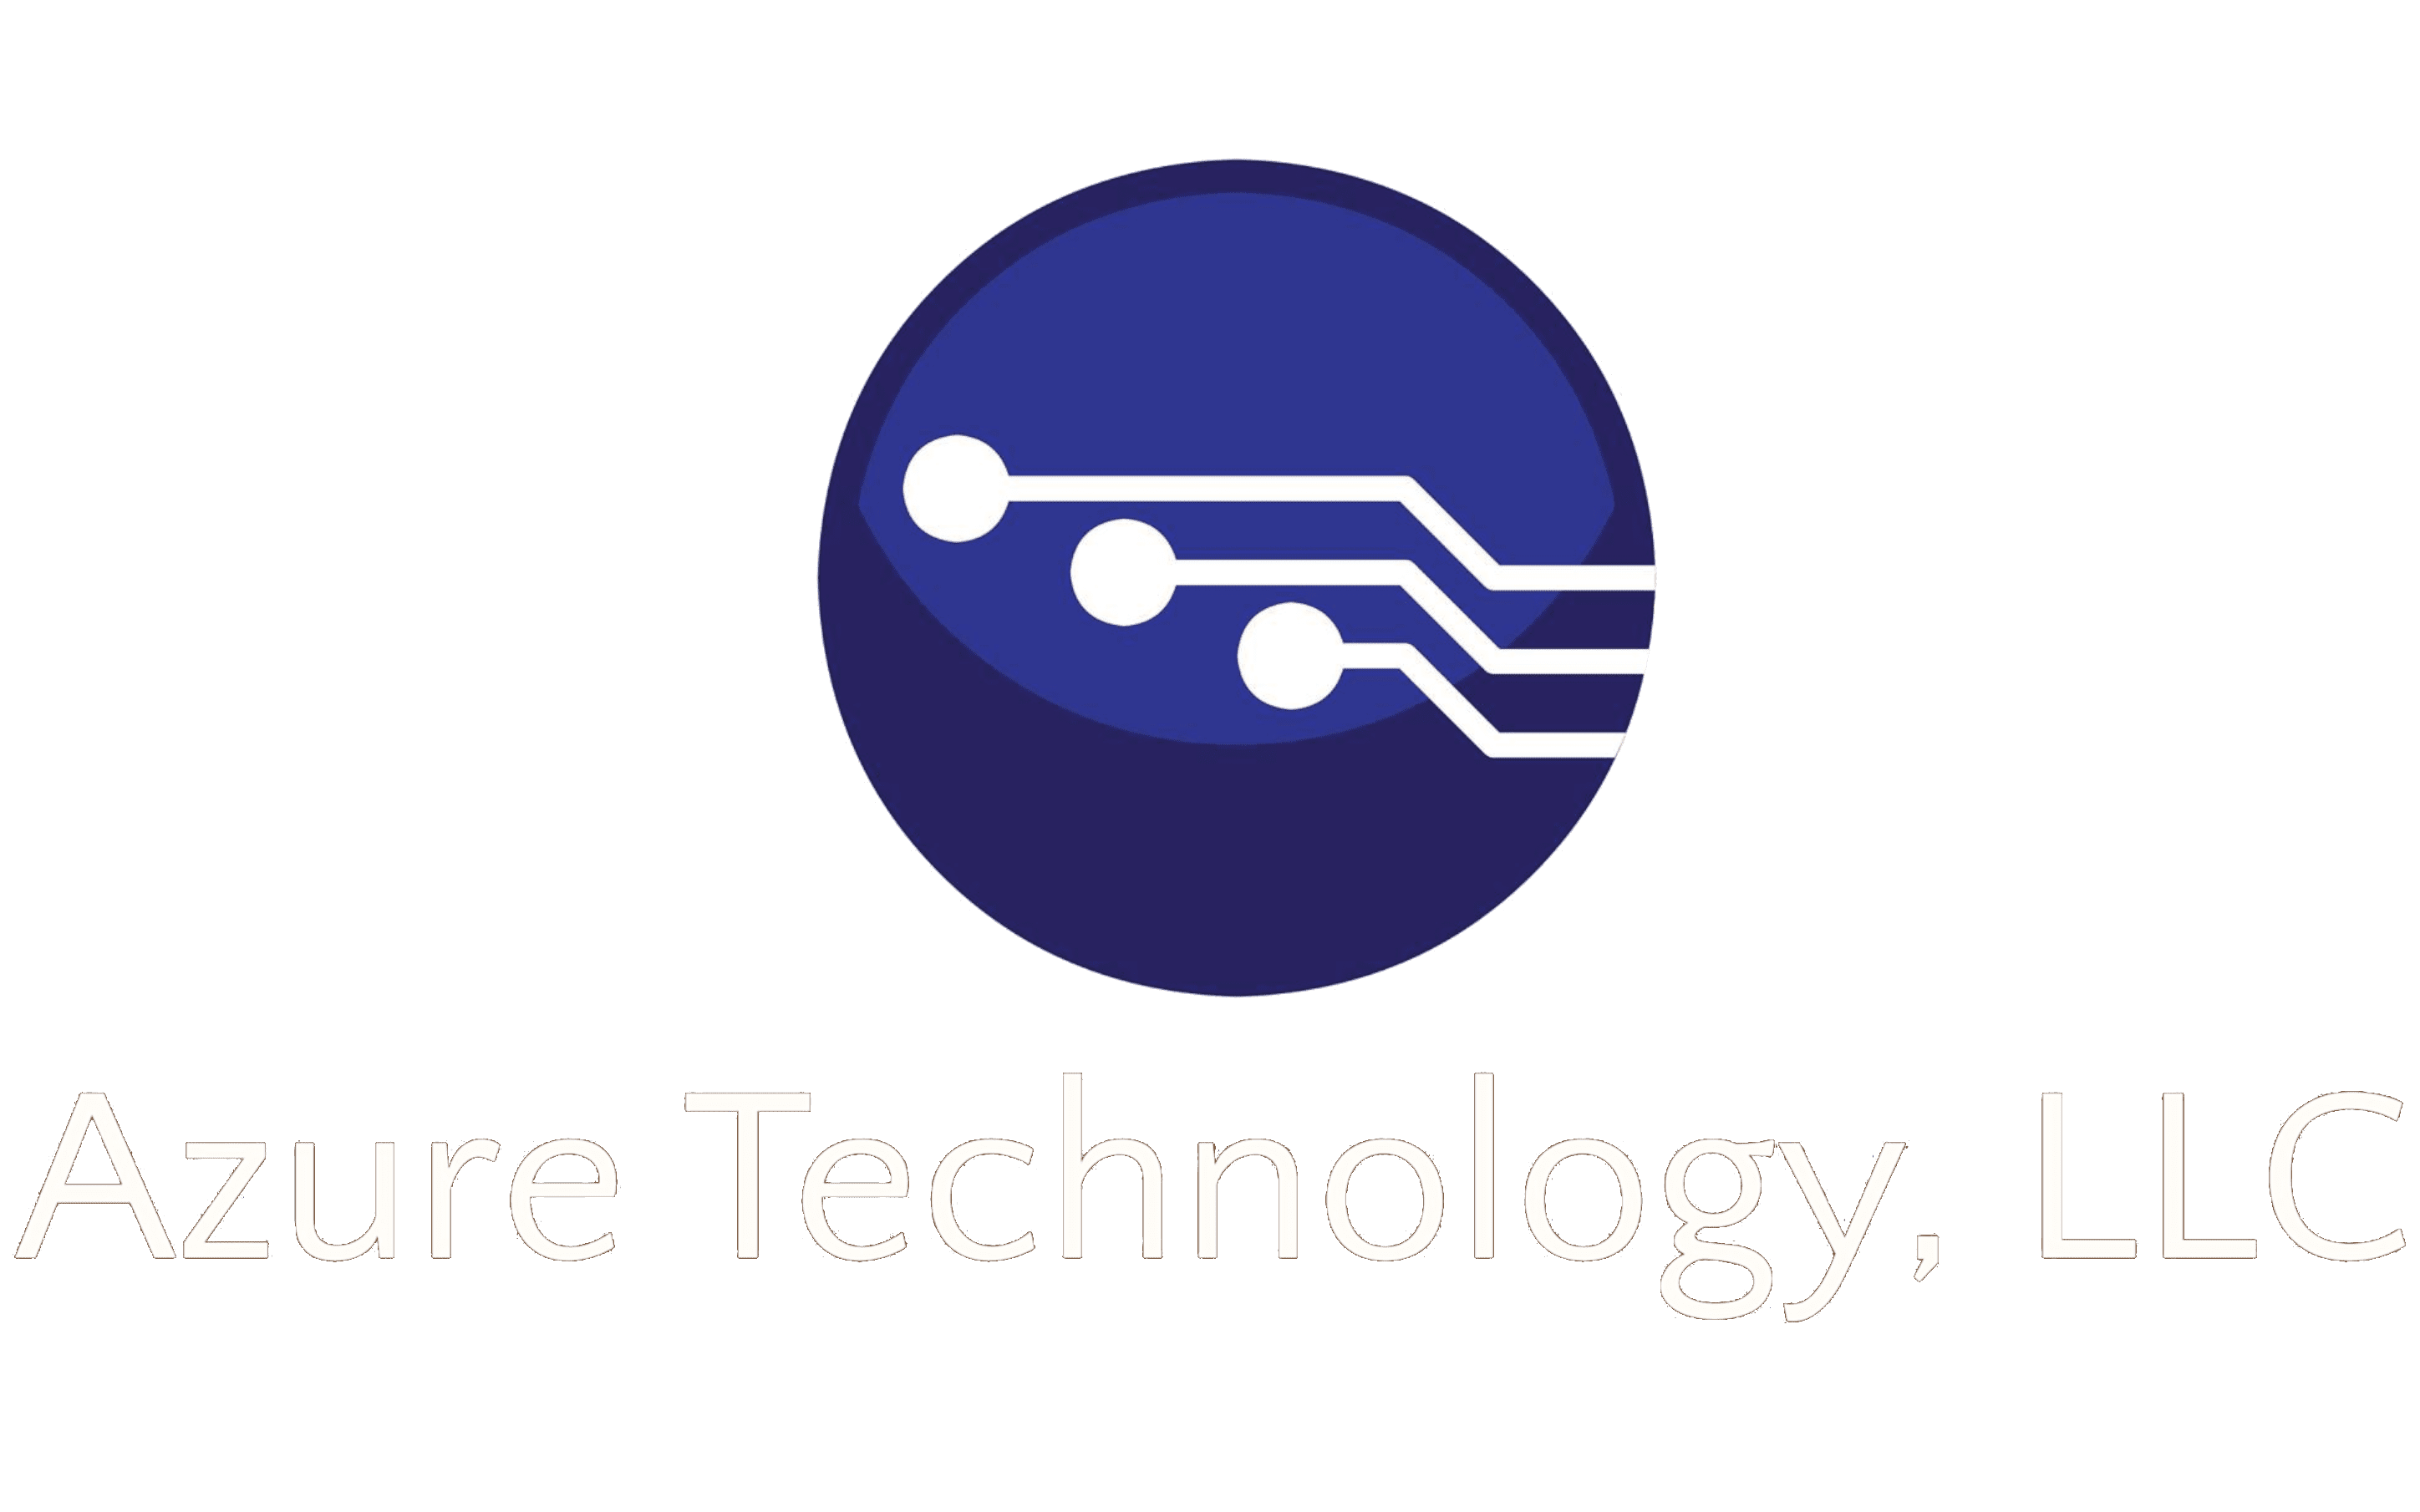 Azure Technology, LLC